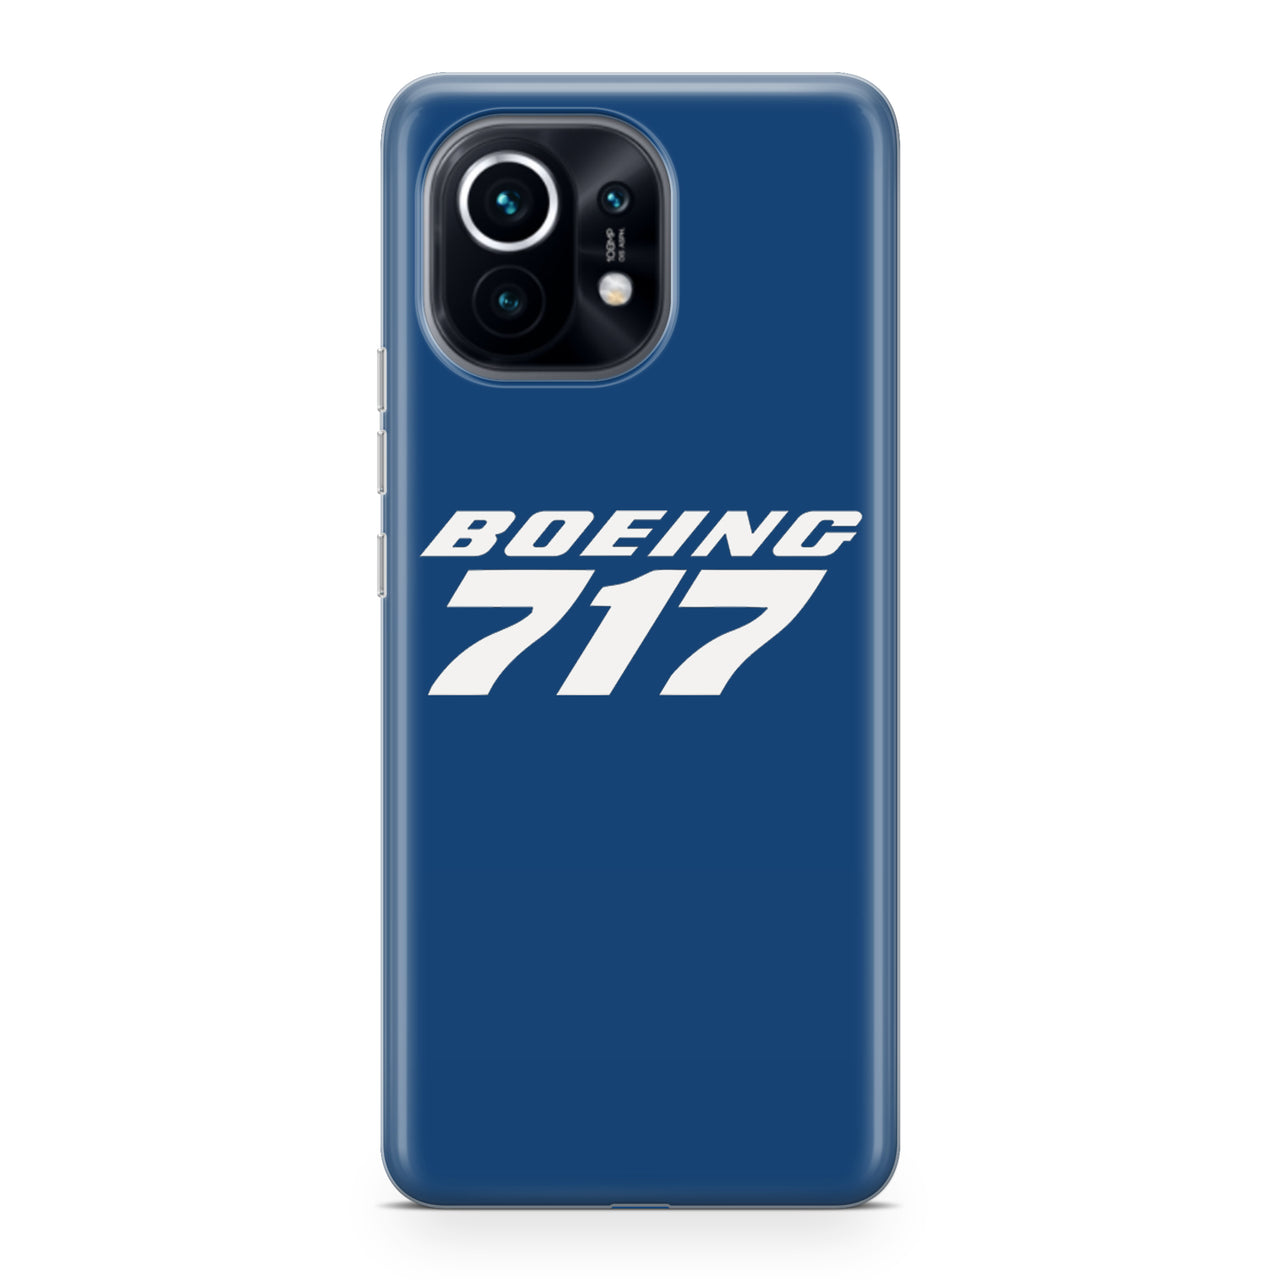 Boeing 717 & Text Designed Xiaomi Cases